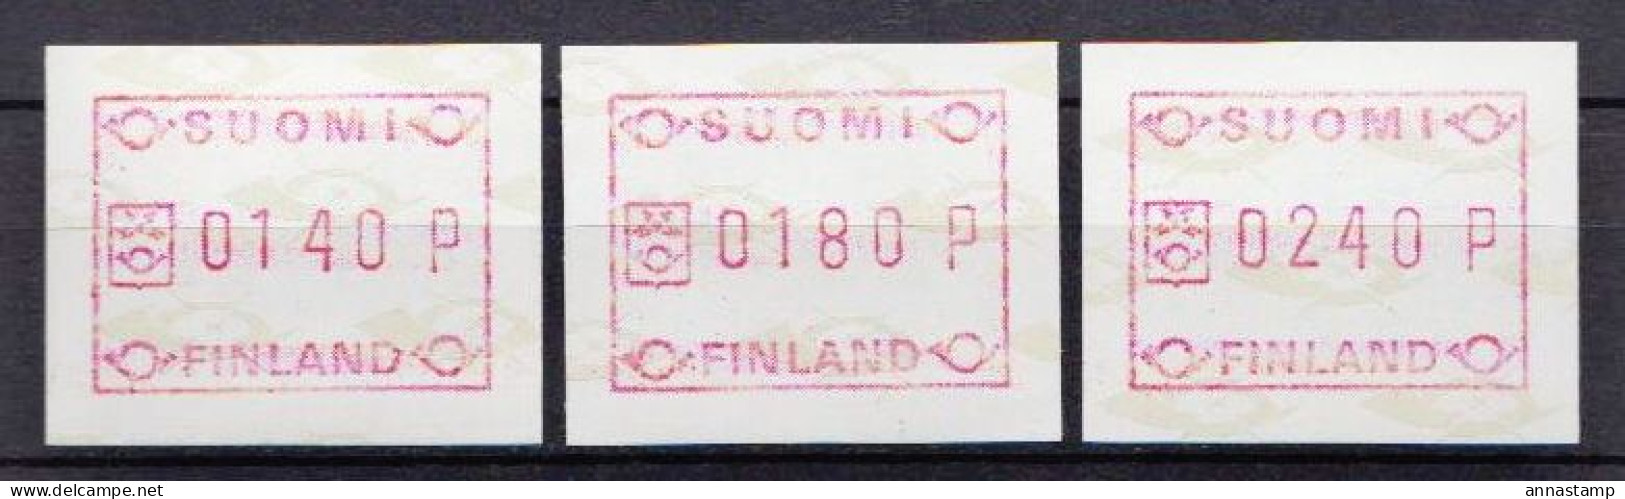 Finland MNH Stamps - Automaatzegels [ATM]